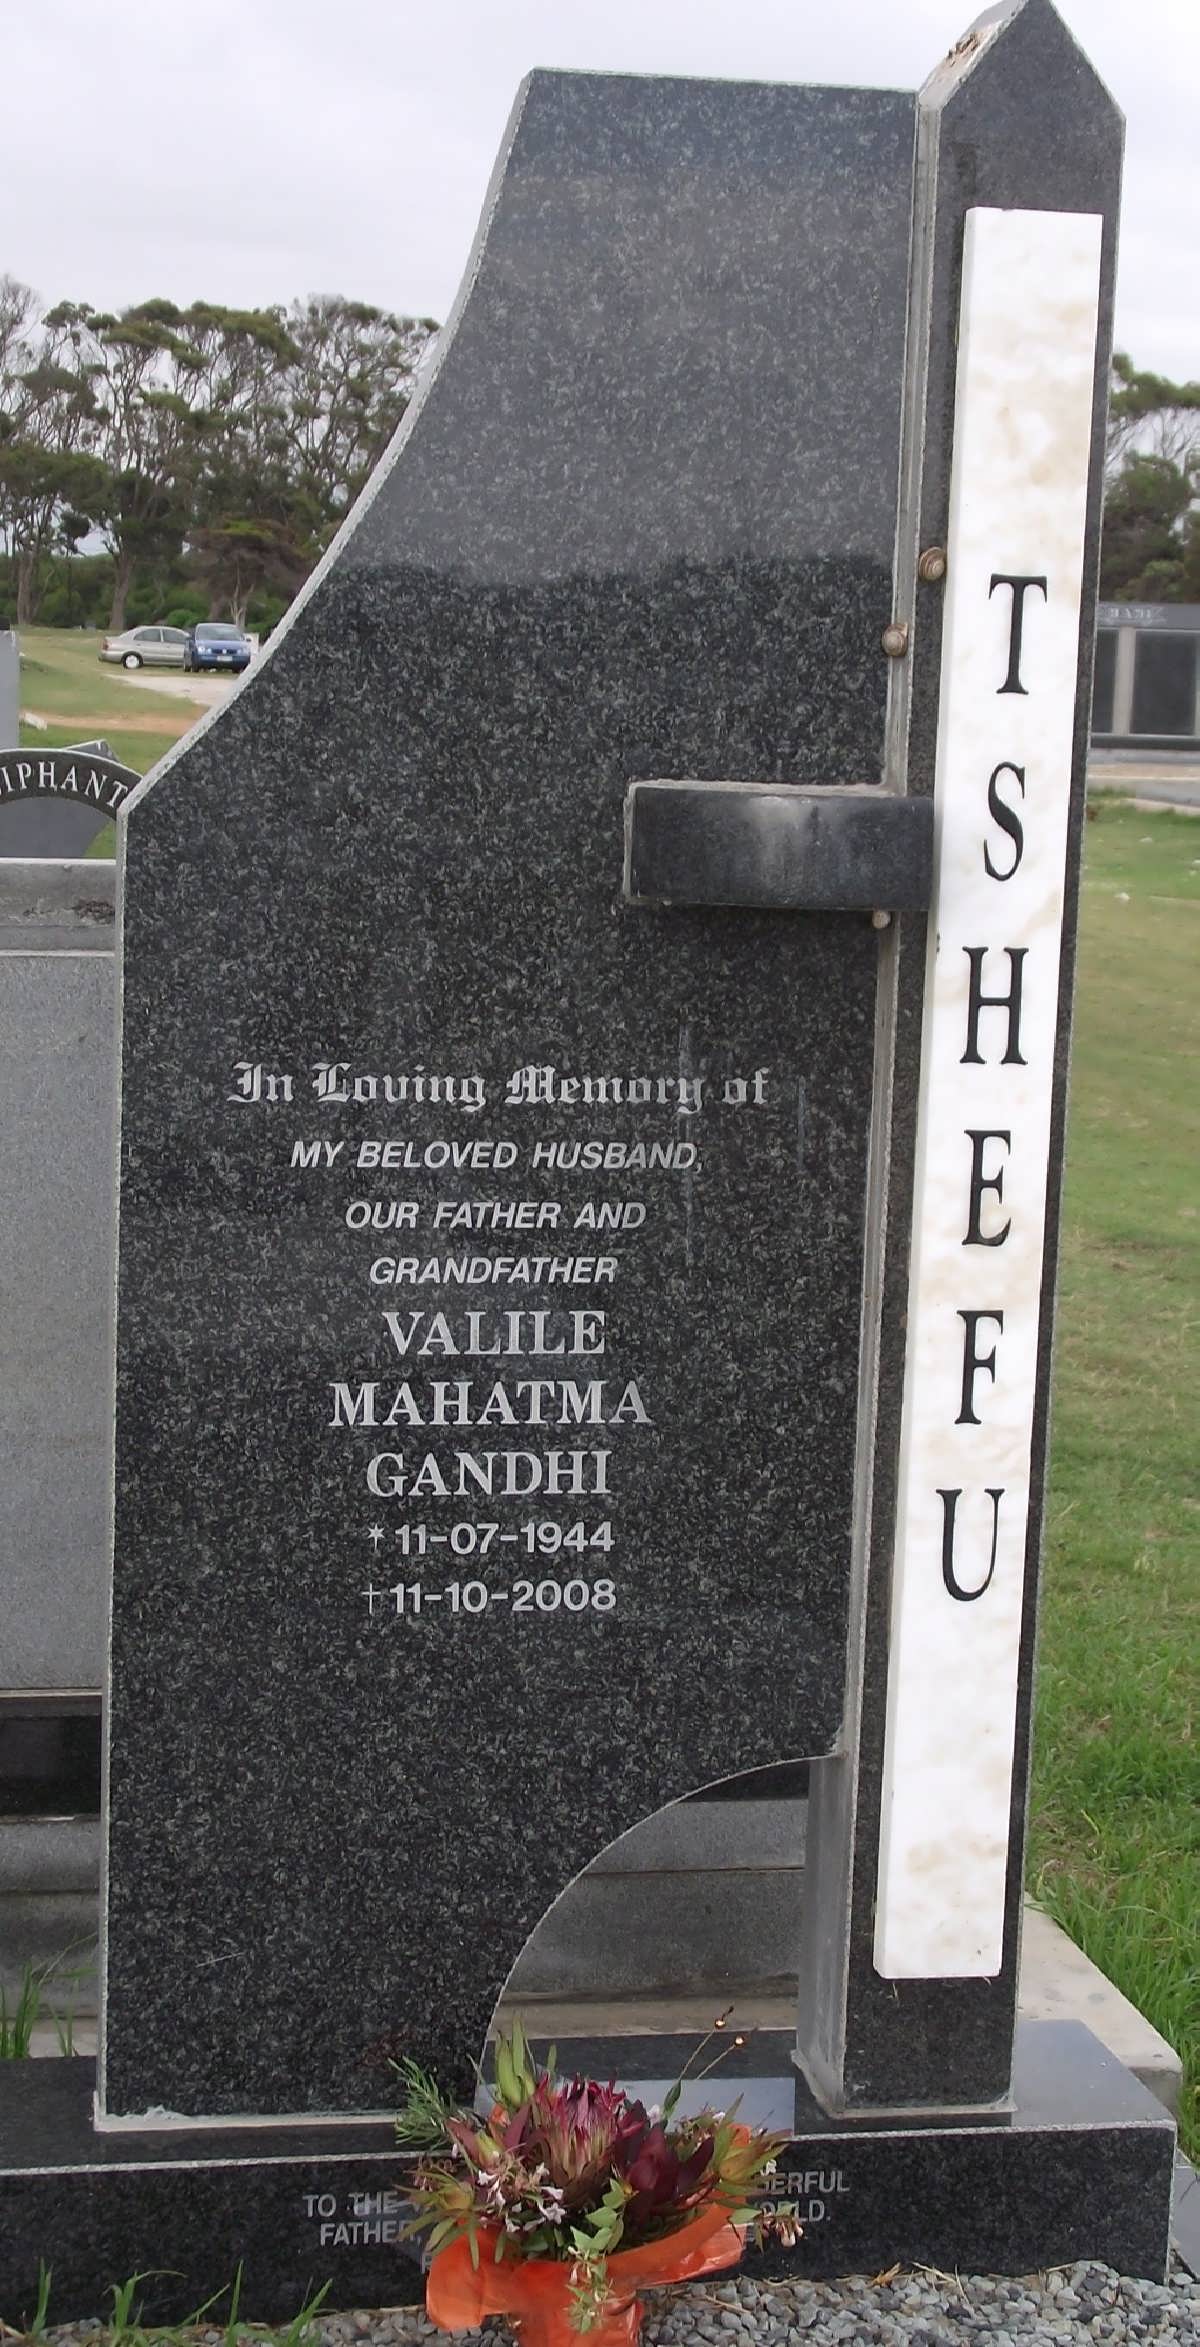 TSHEFU Valile Mahatma Gandhi 1944-2008